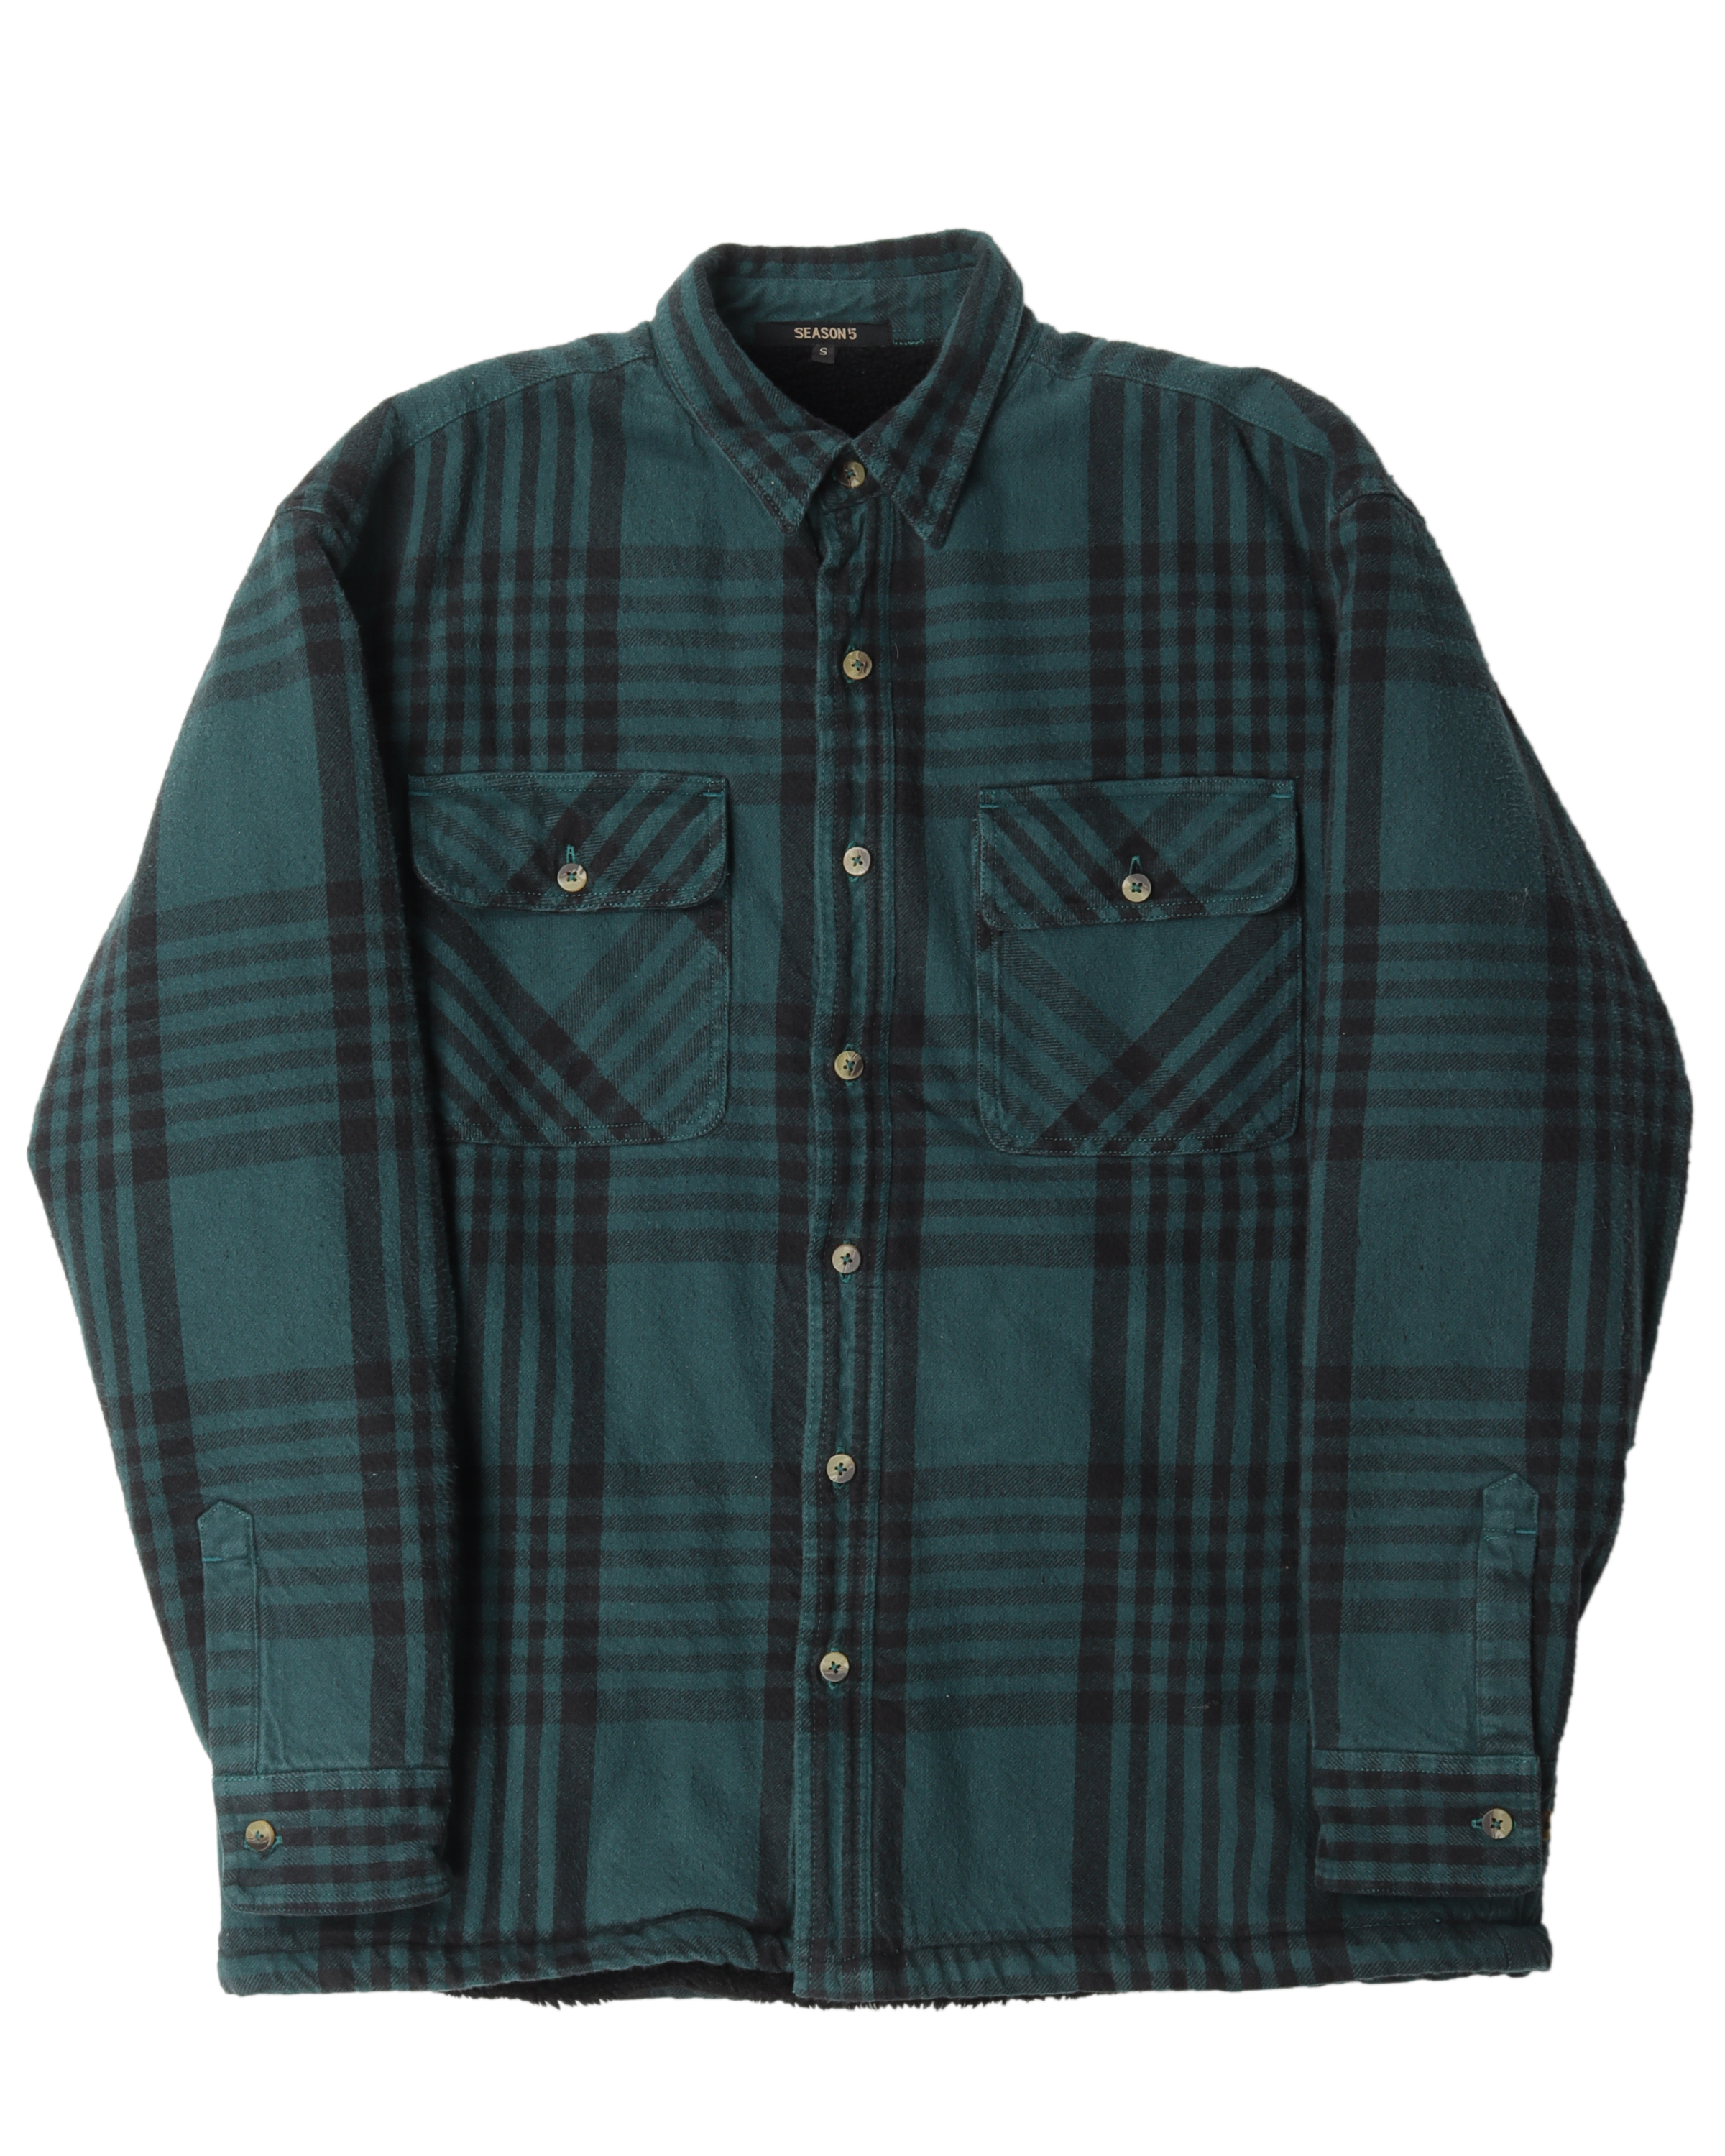 Yeezy season 5 unreleased flannel shirt - 通販 - piyersoft.com